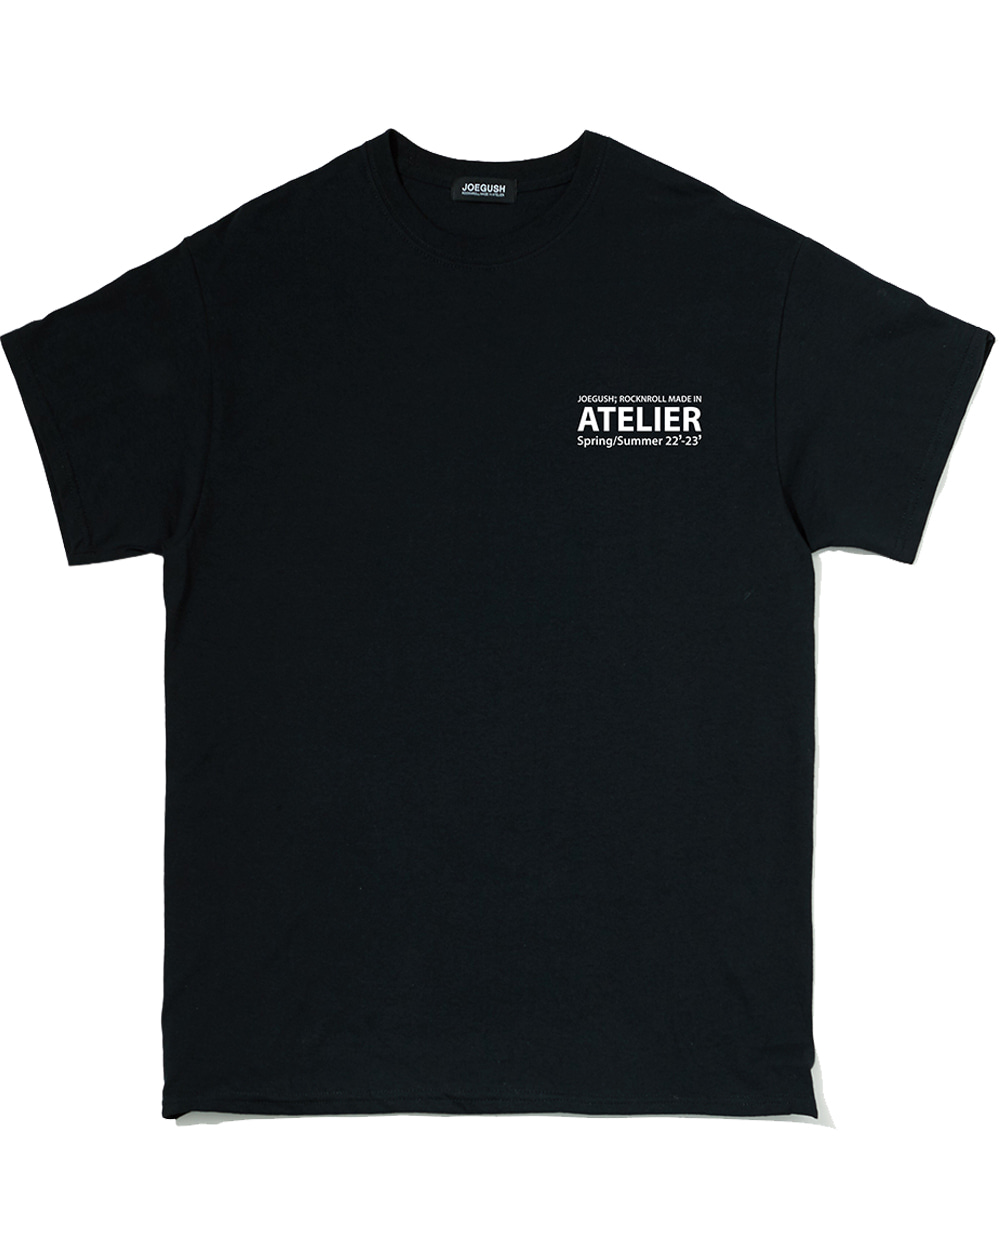 Atelier T-Shirt (Black)